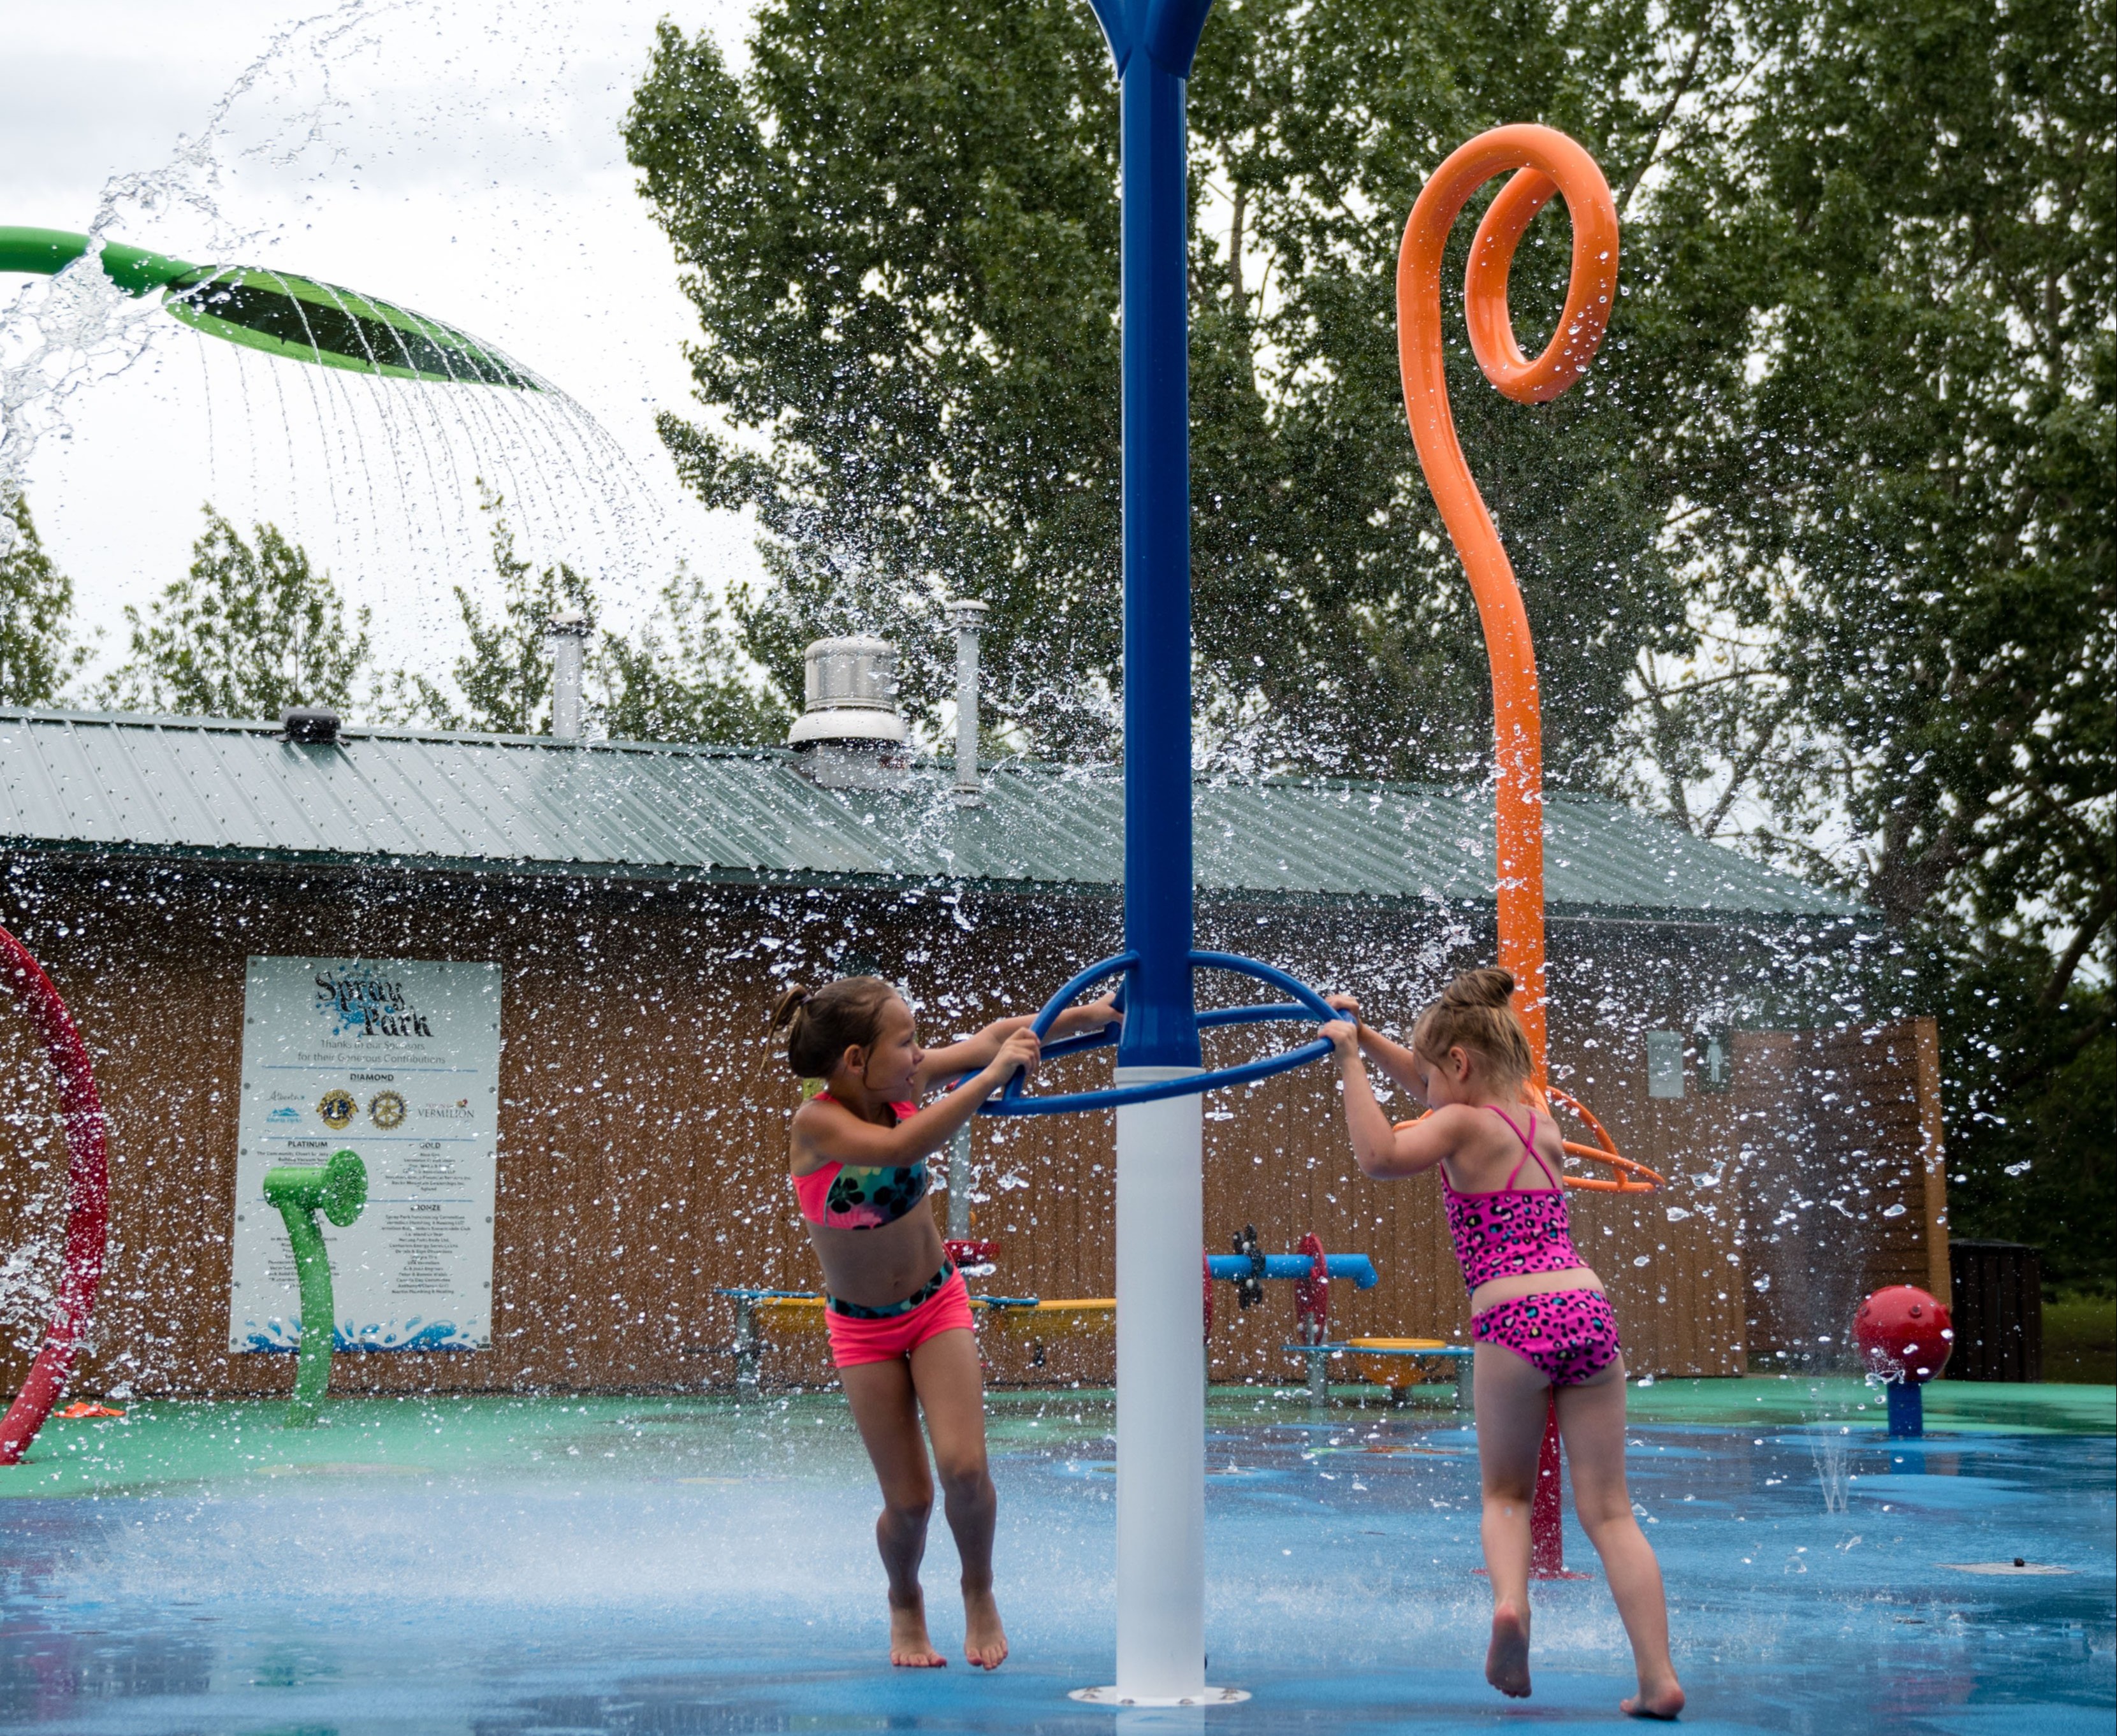 Children playing at the splash park